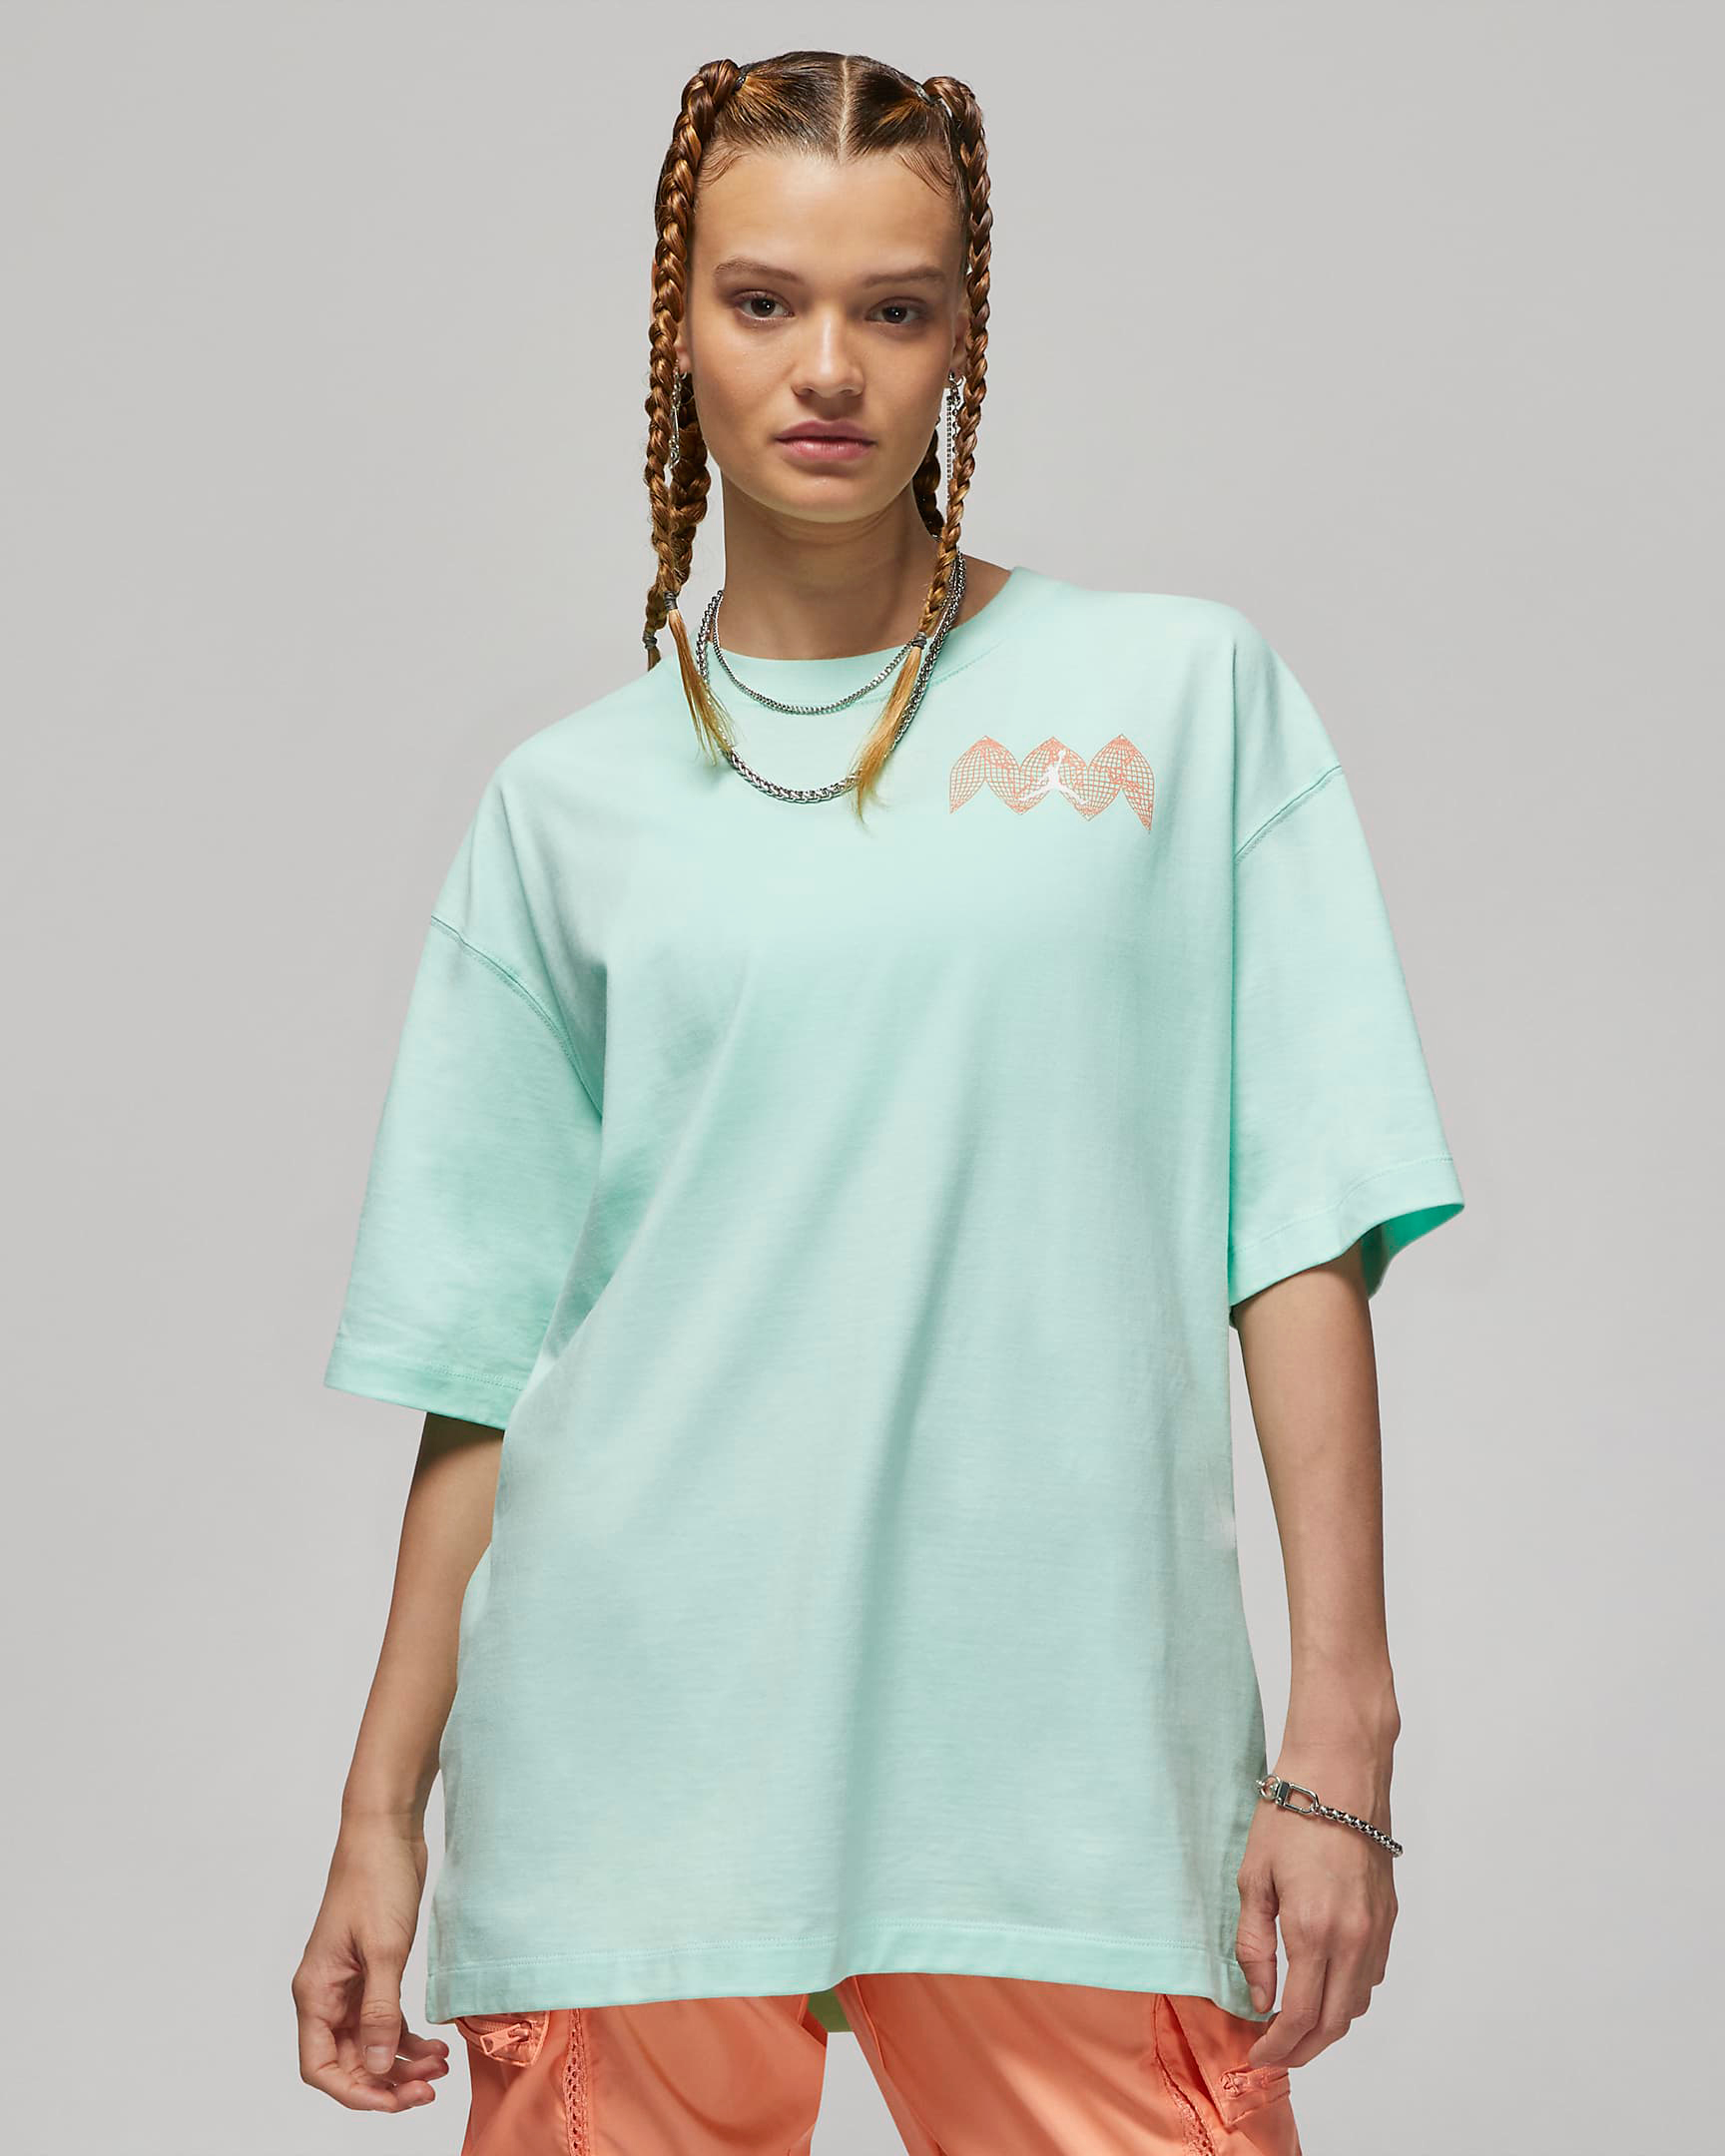 jordan-heritage-womens-t-shirt-mint-foam-1